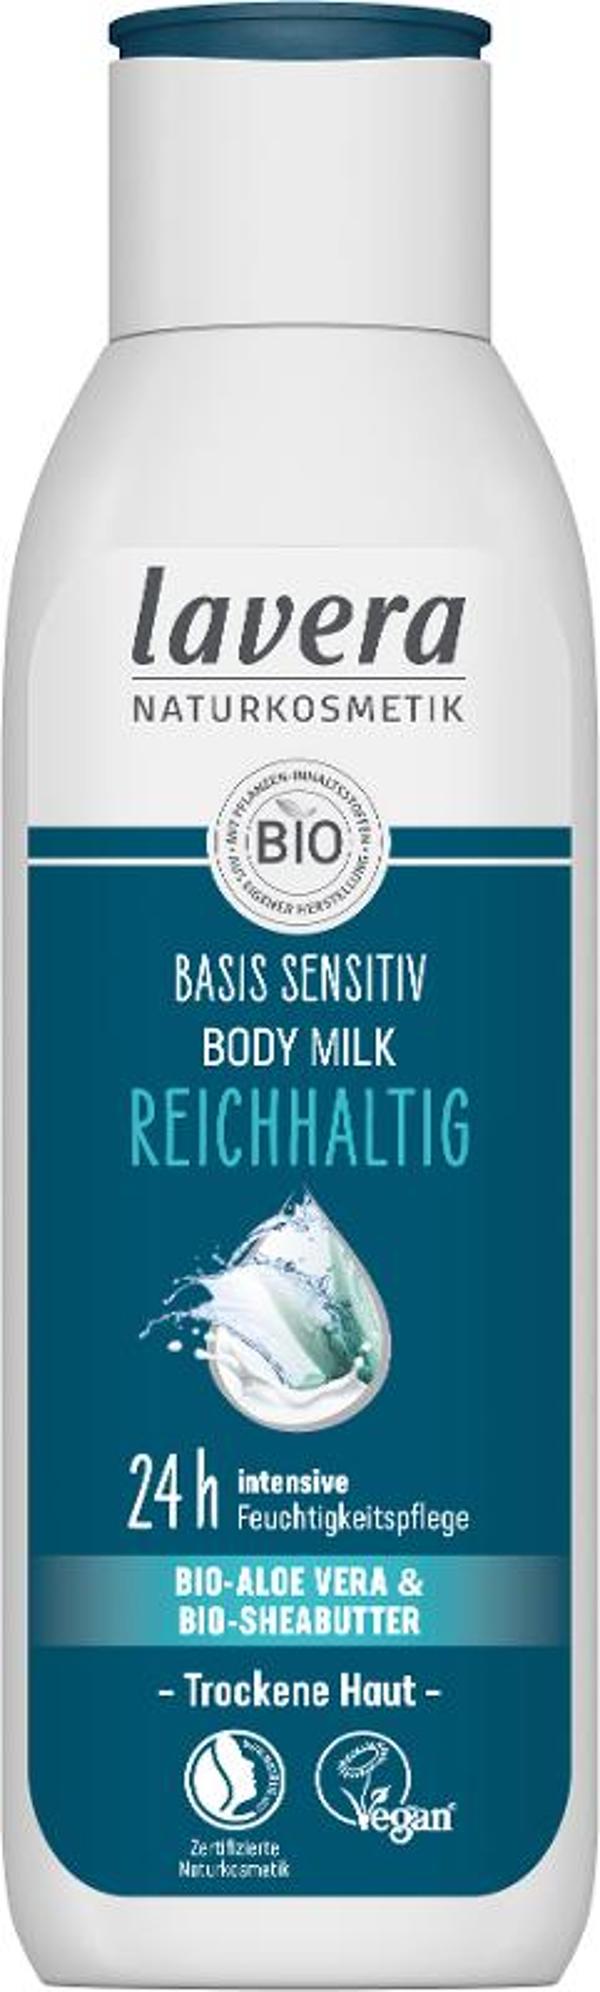 Produktfoto zu Basis Sensitiv Bodymilk Reichhaltig